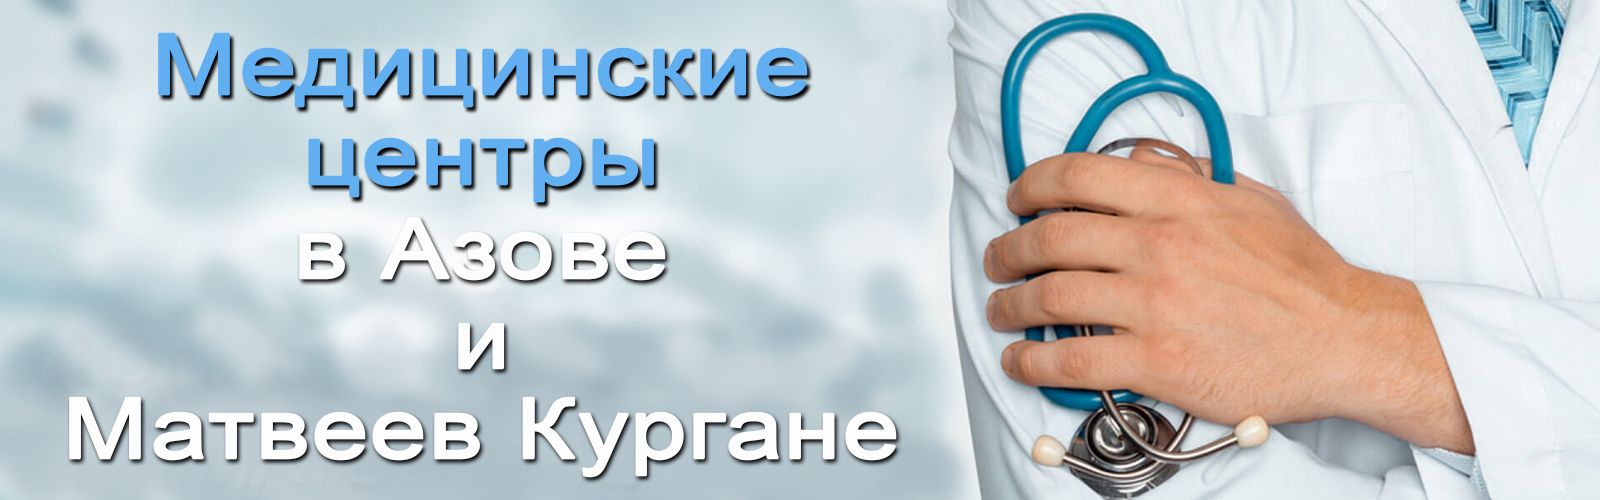 Медицинские центры в Азове и Матвеев Кургане